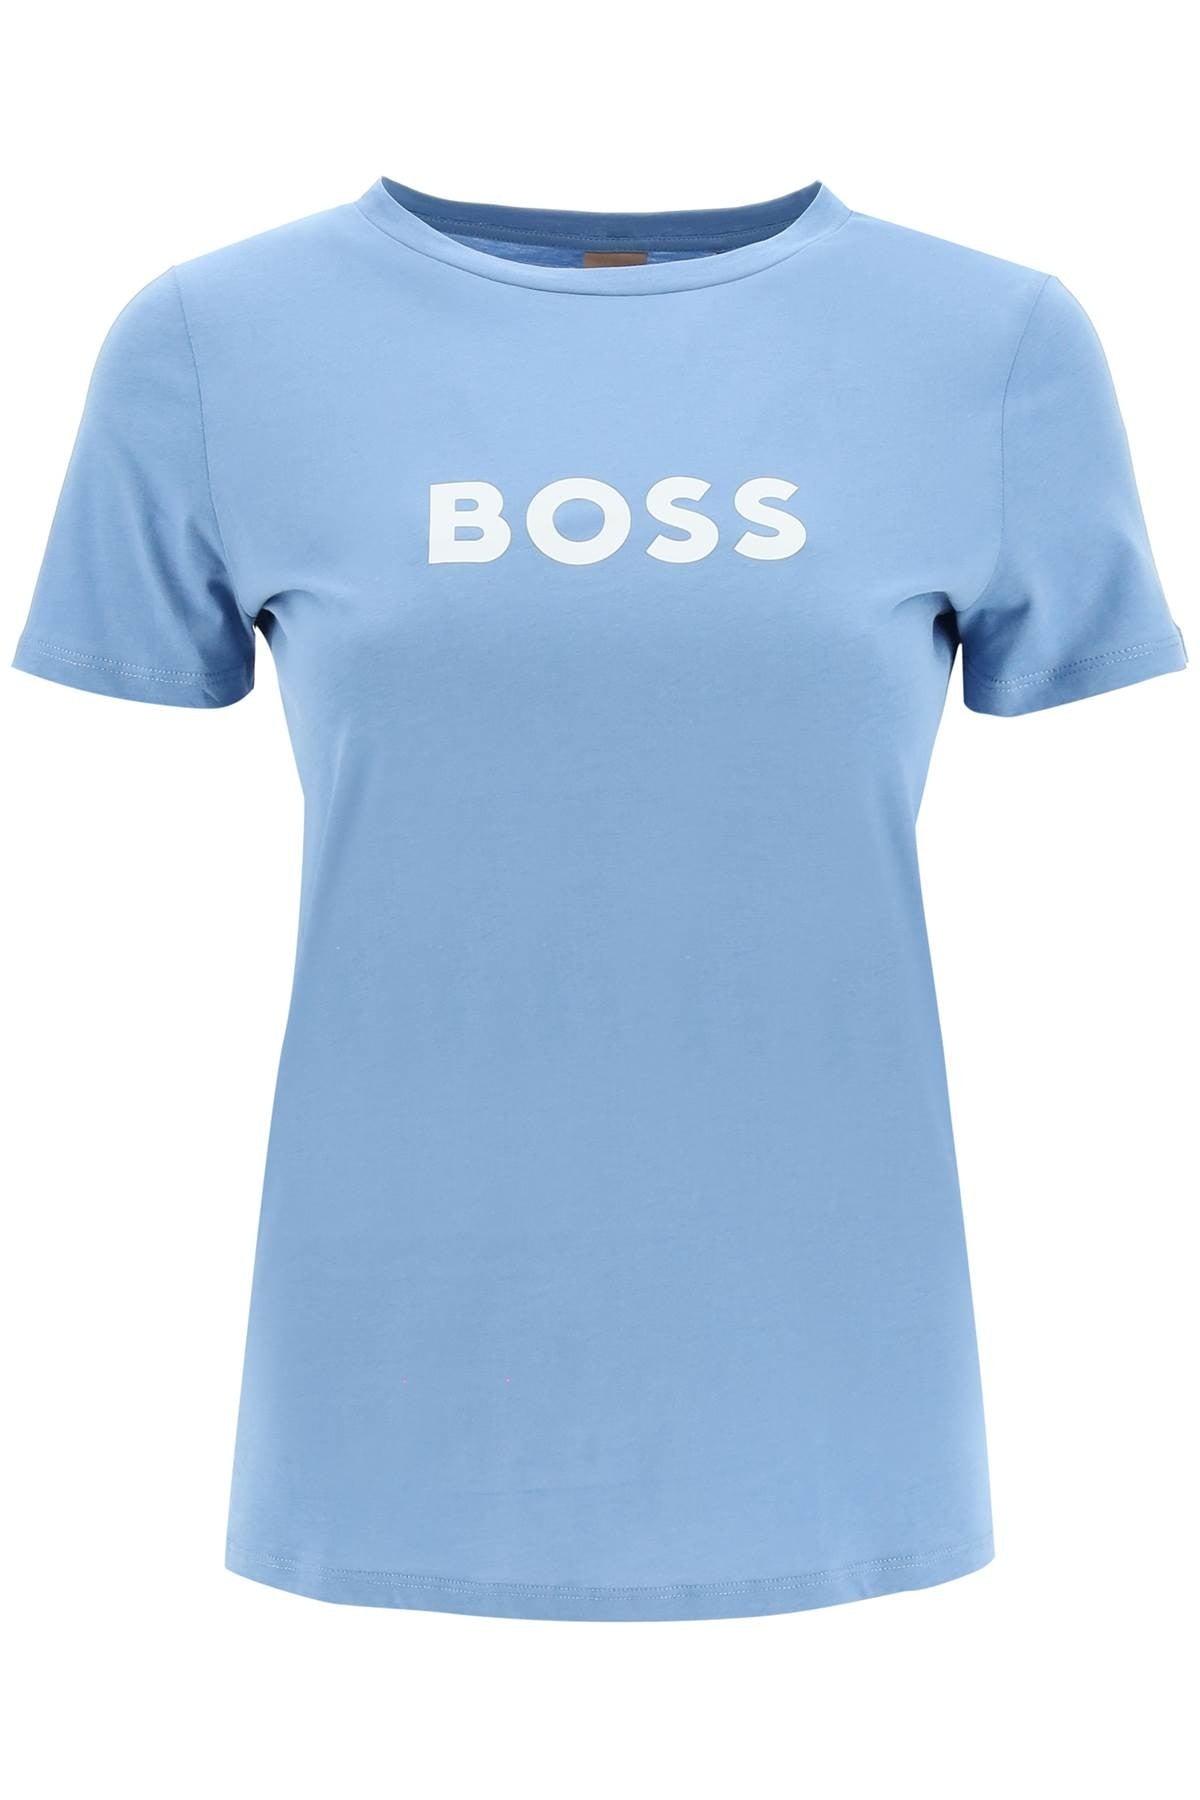 BOSS by HUGO BOSS Logo Print T-shirt in Blue | Lyst